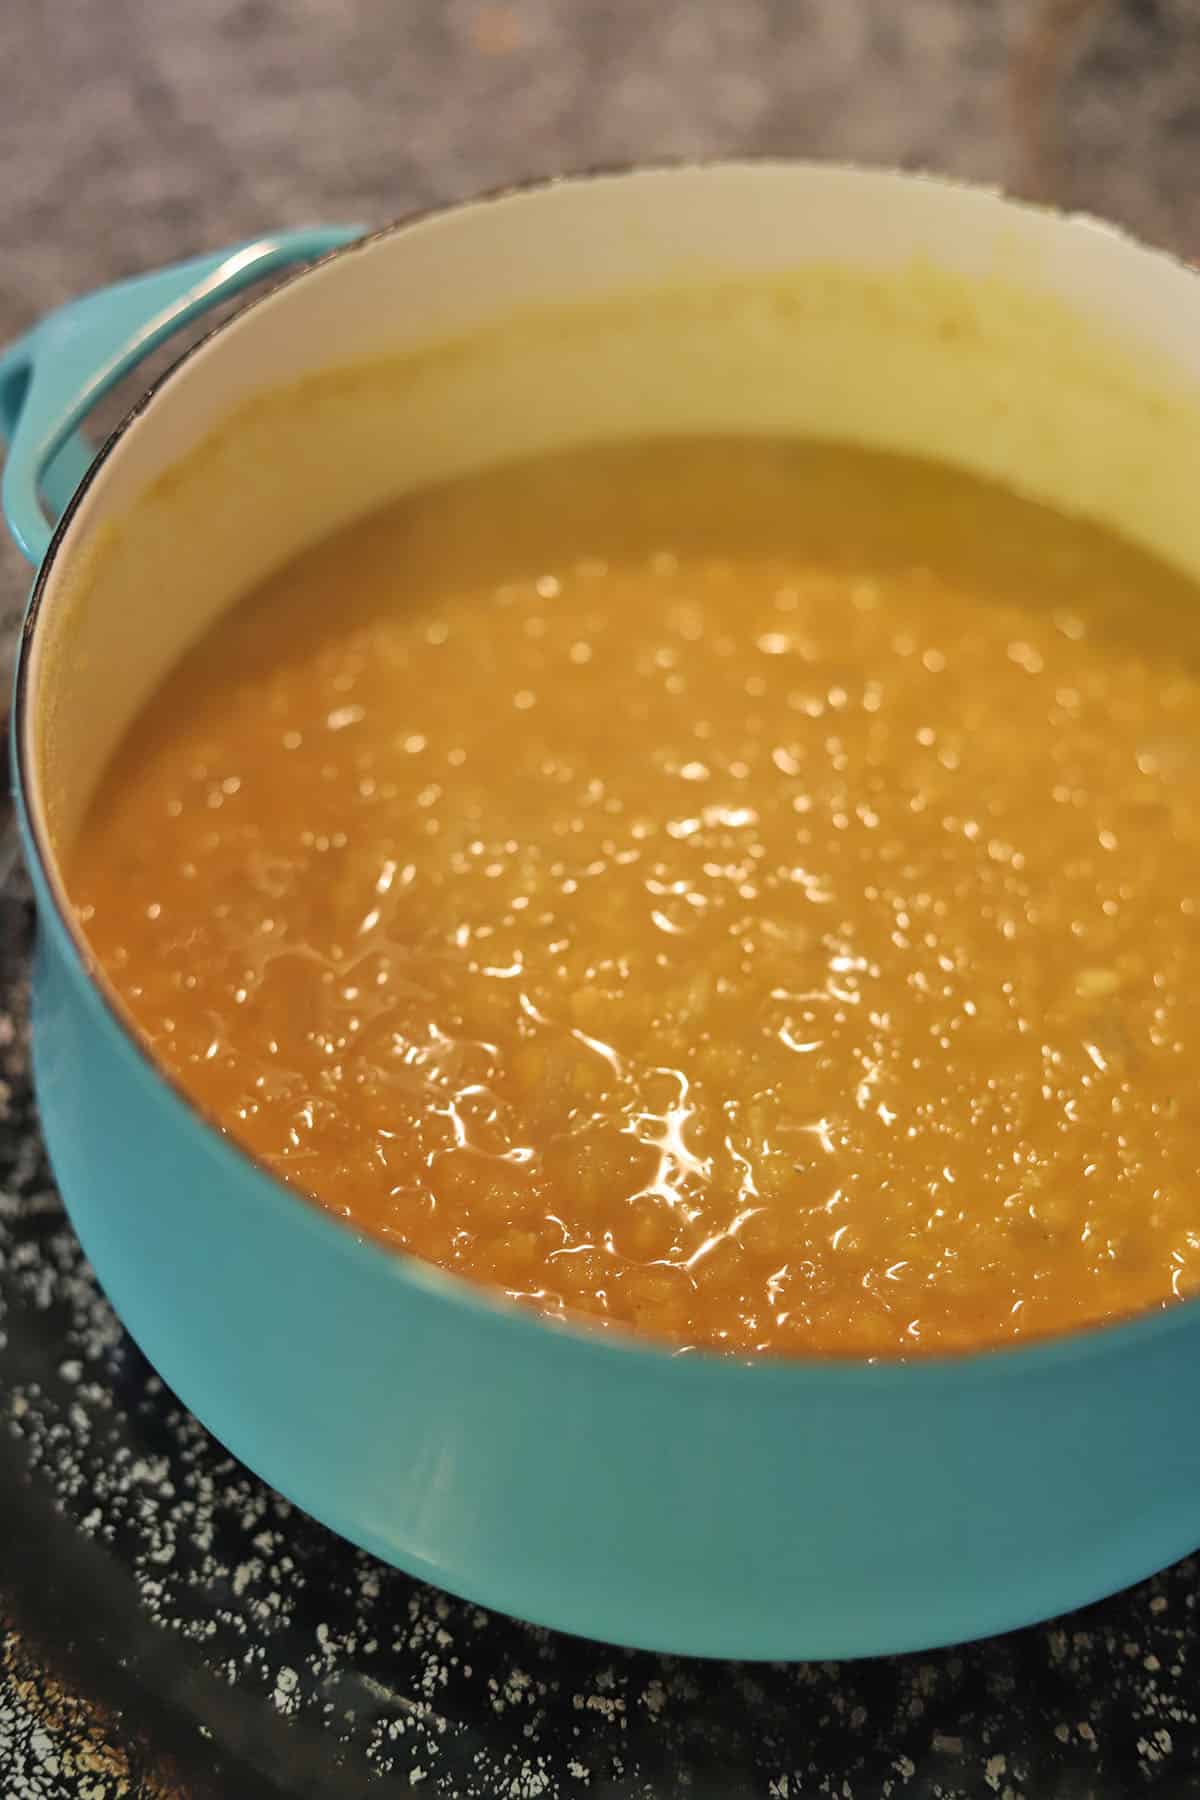 Red lentil soup on stove after lentils have disintegrated.